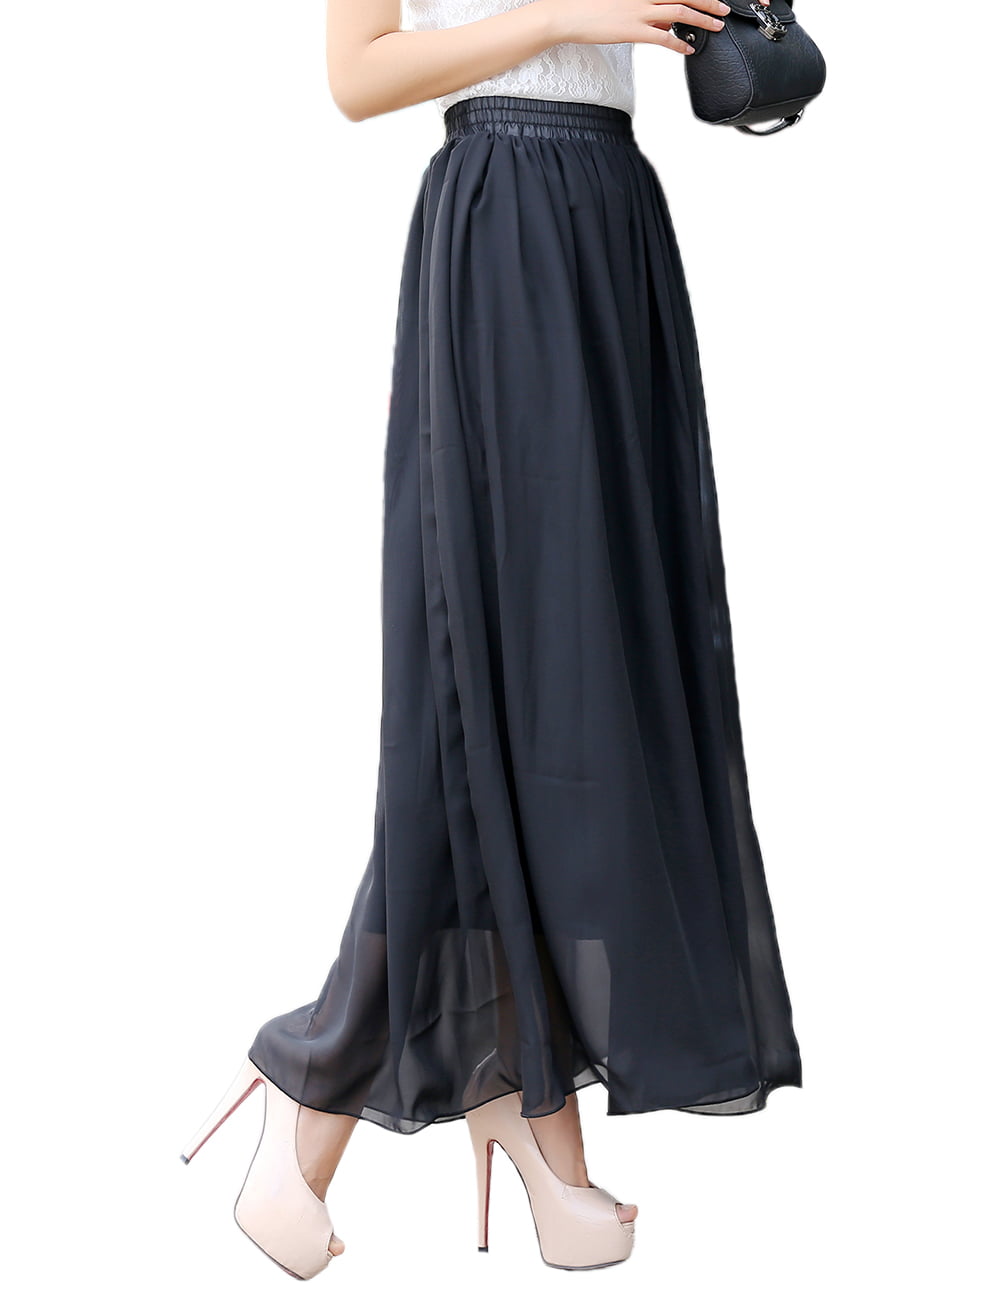 TopTie Full Circle Skirt Flowing Maxi Skirts Best Chiffon Skirt-Black-M ...